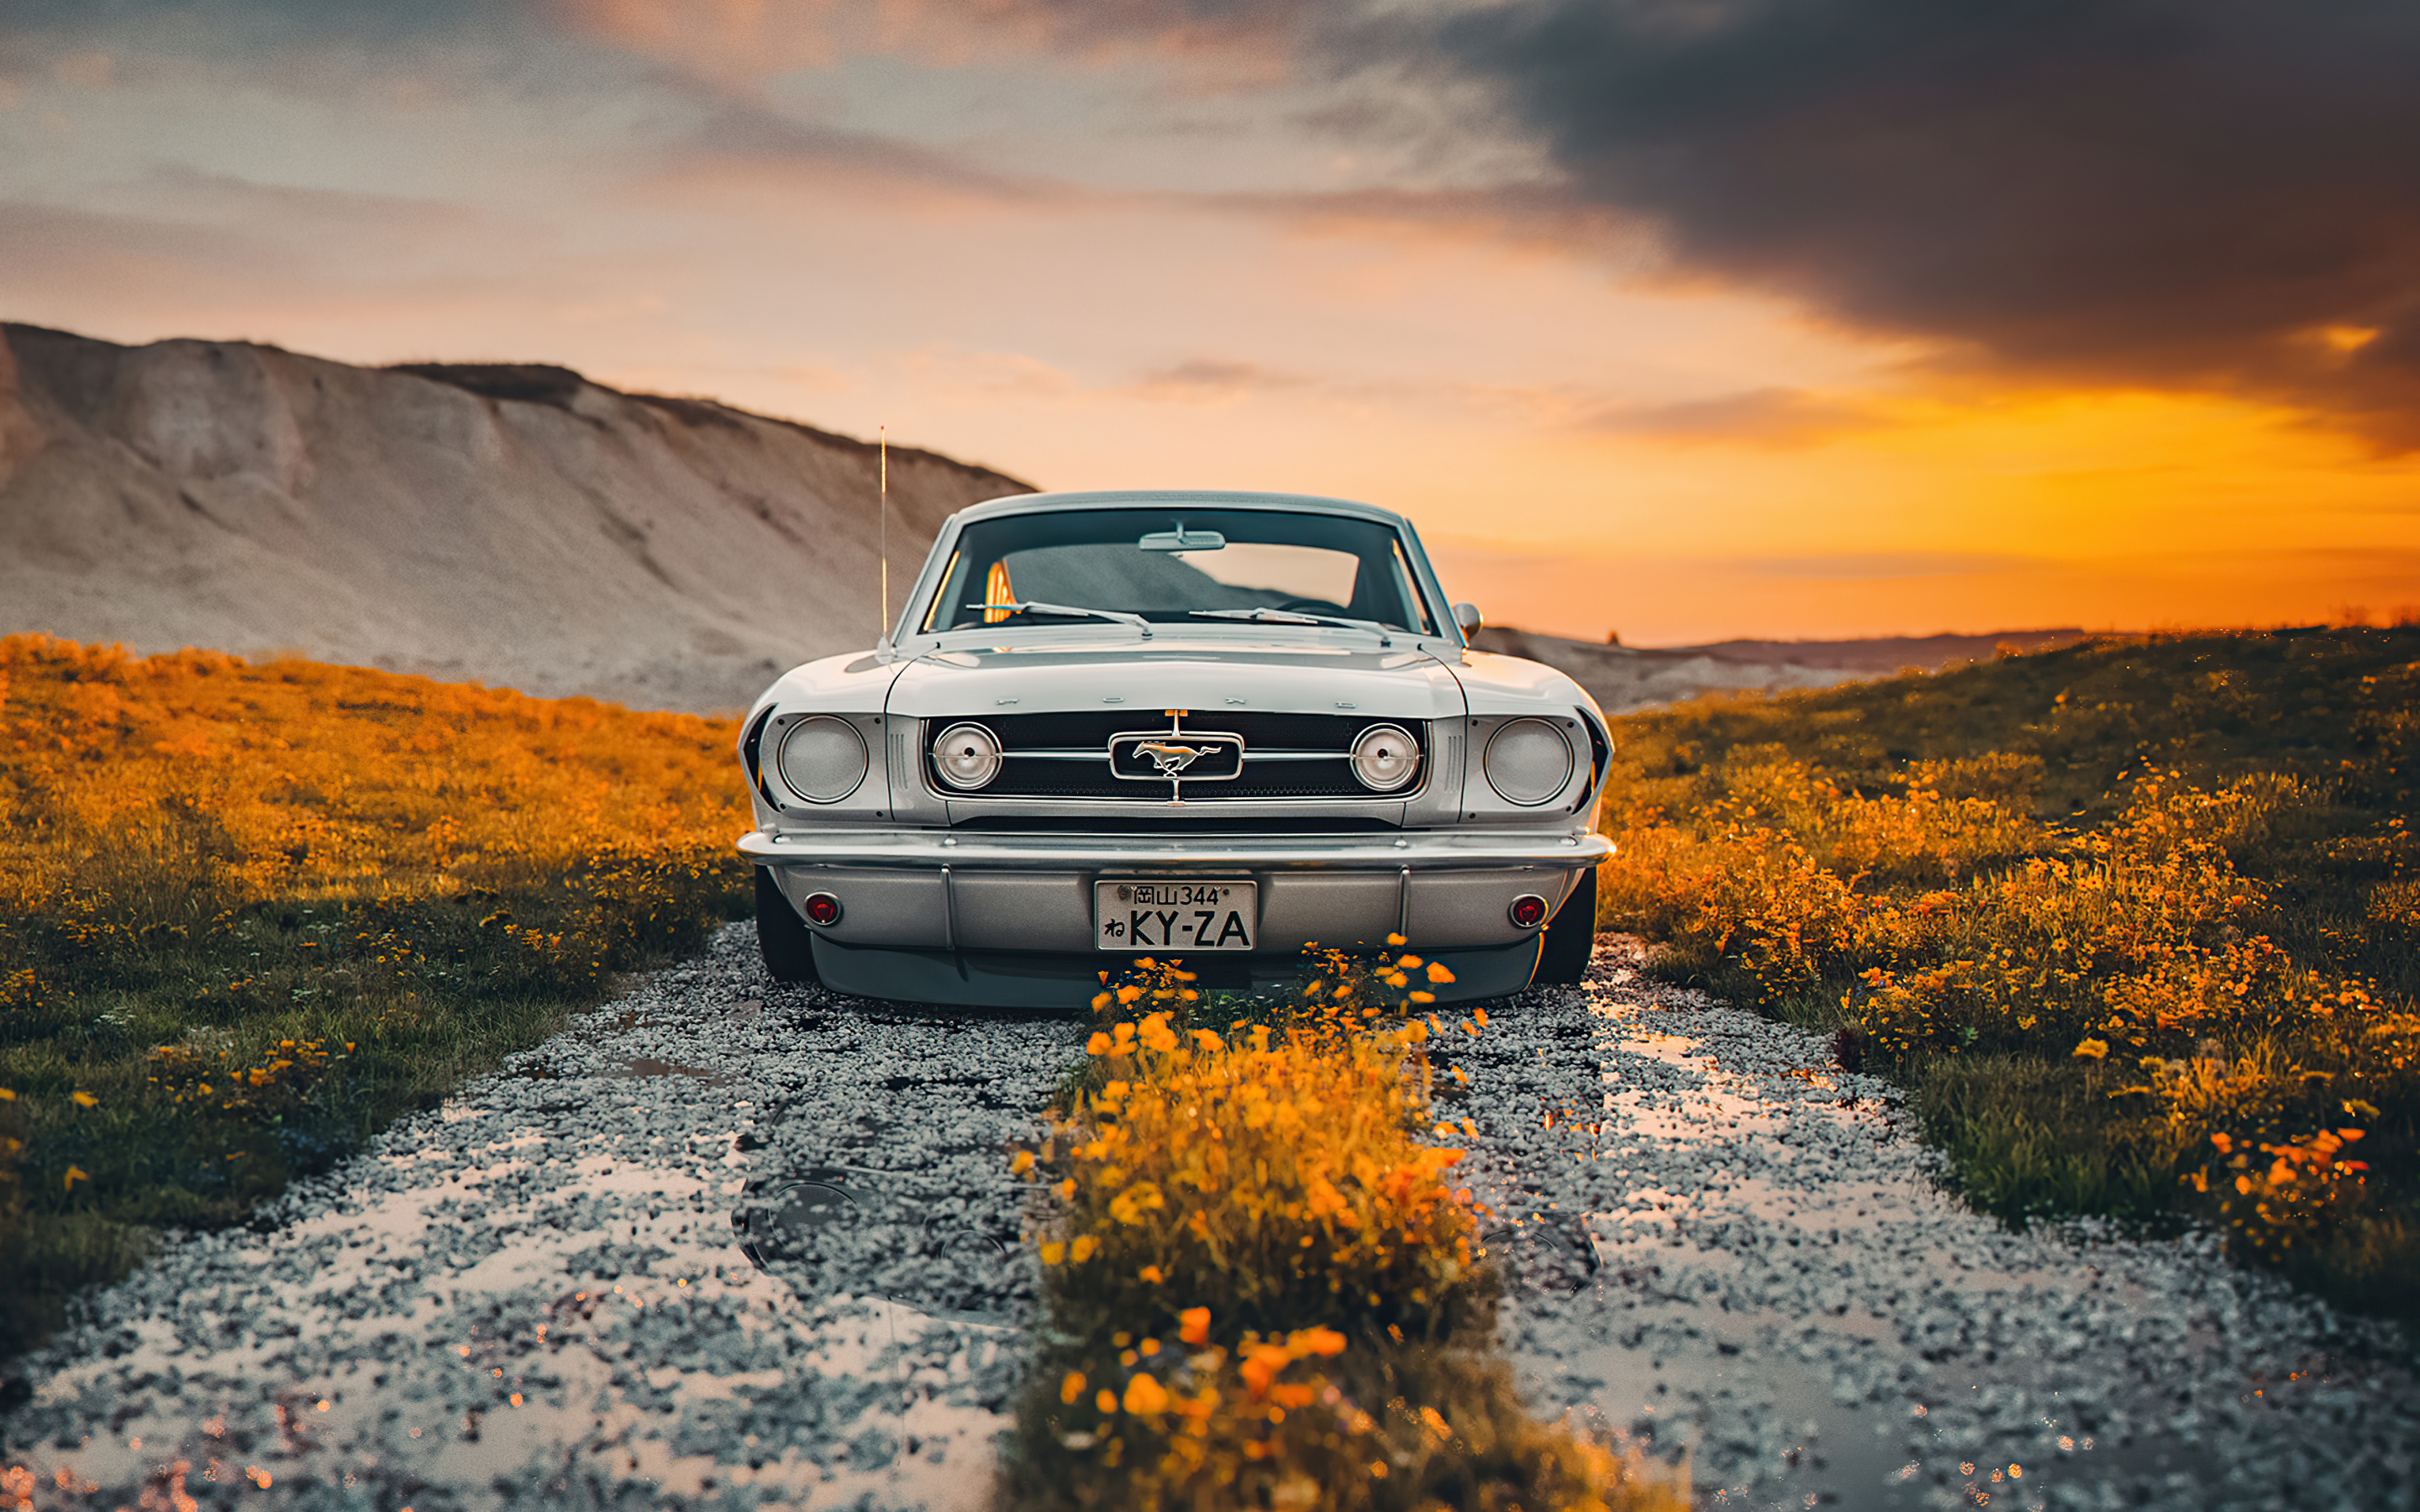 2022 Ford Mustang BBS Motorsport, outdoor & off-road, 2880x1800 wallpaper